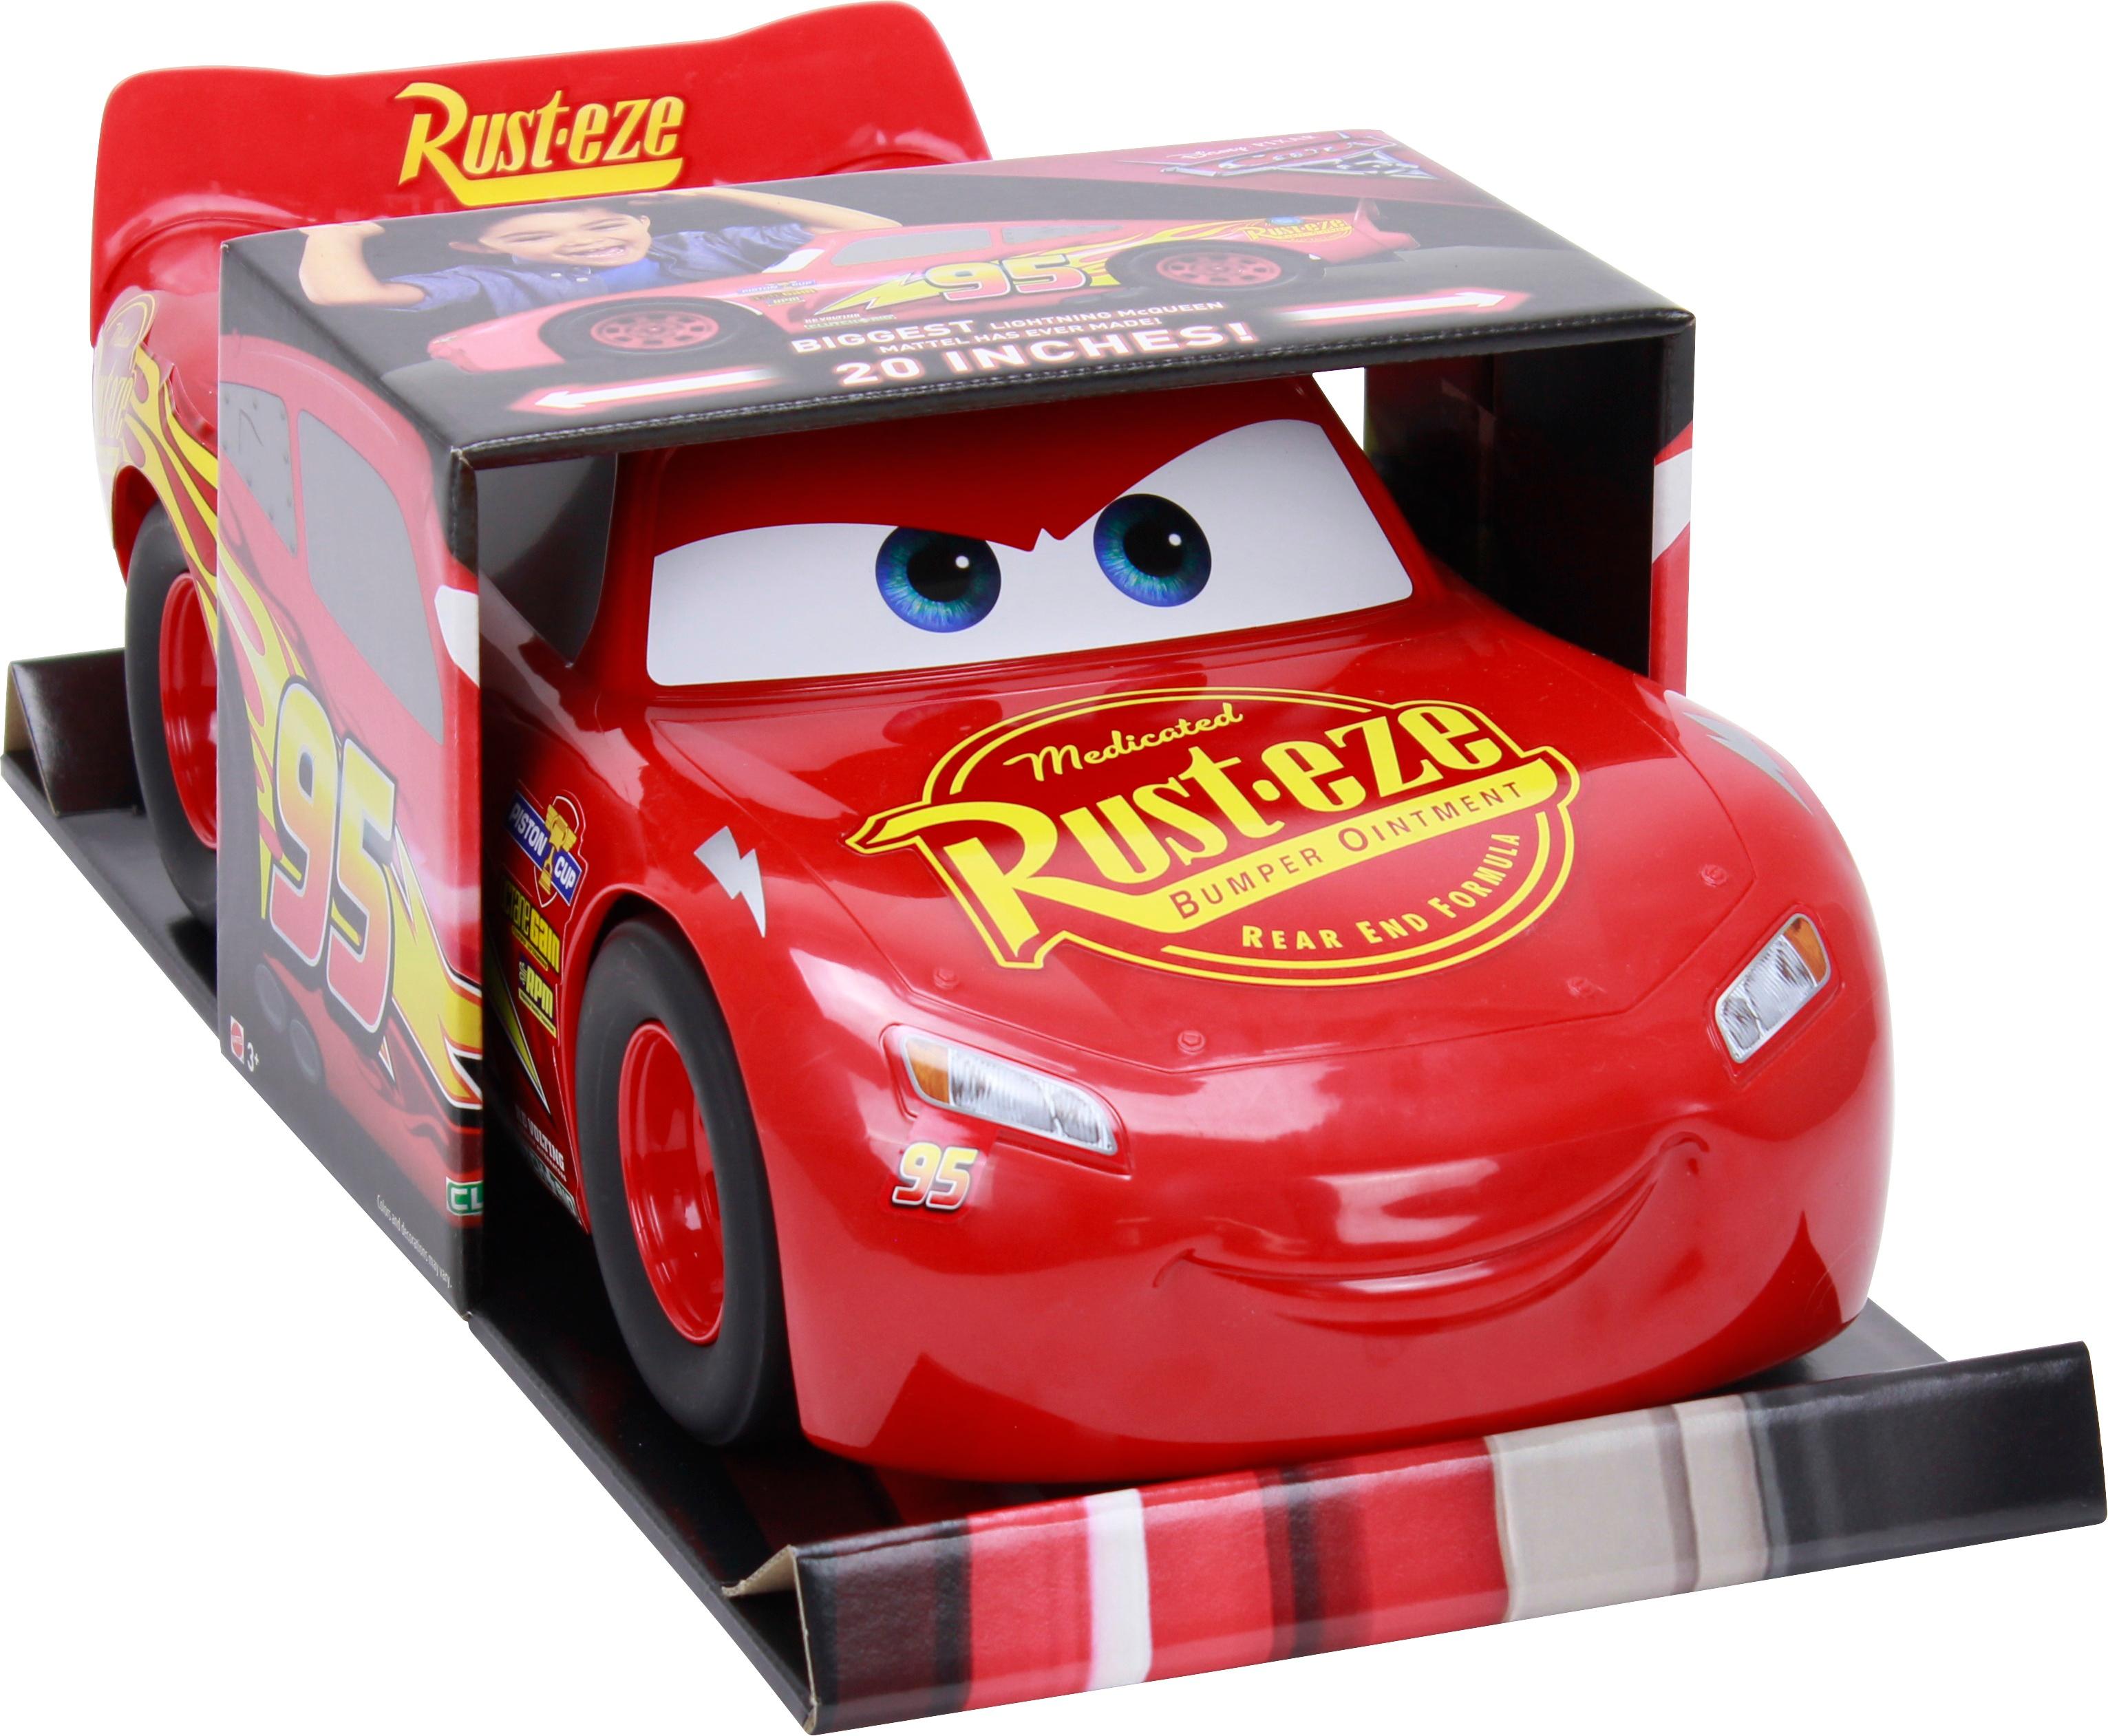  Cars 3 Disney Pixar 10-Inch Lightning McQueen Vehicle